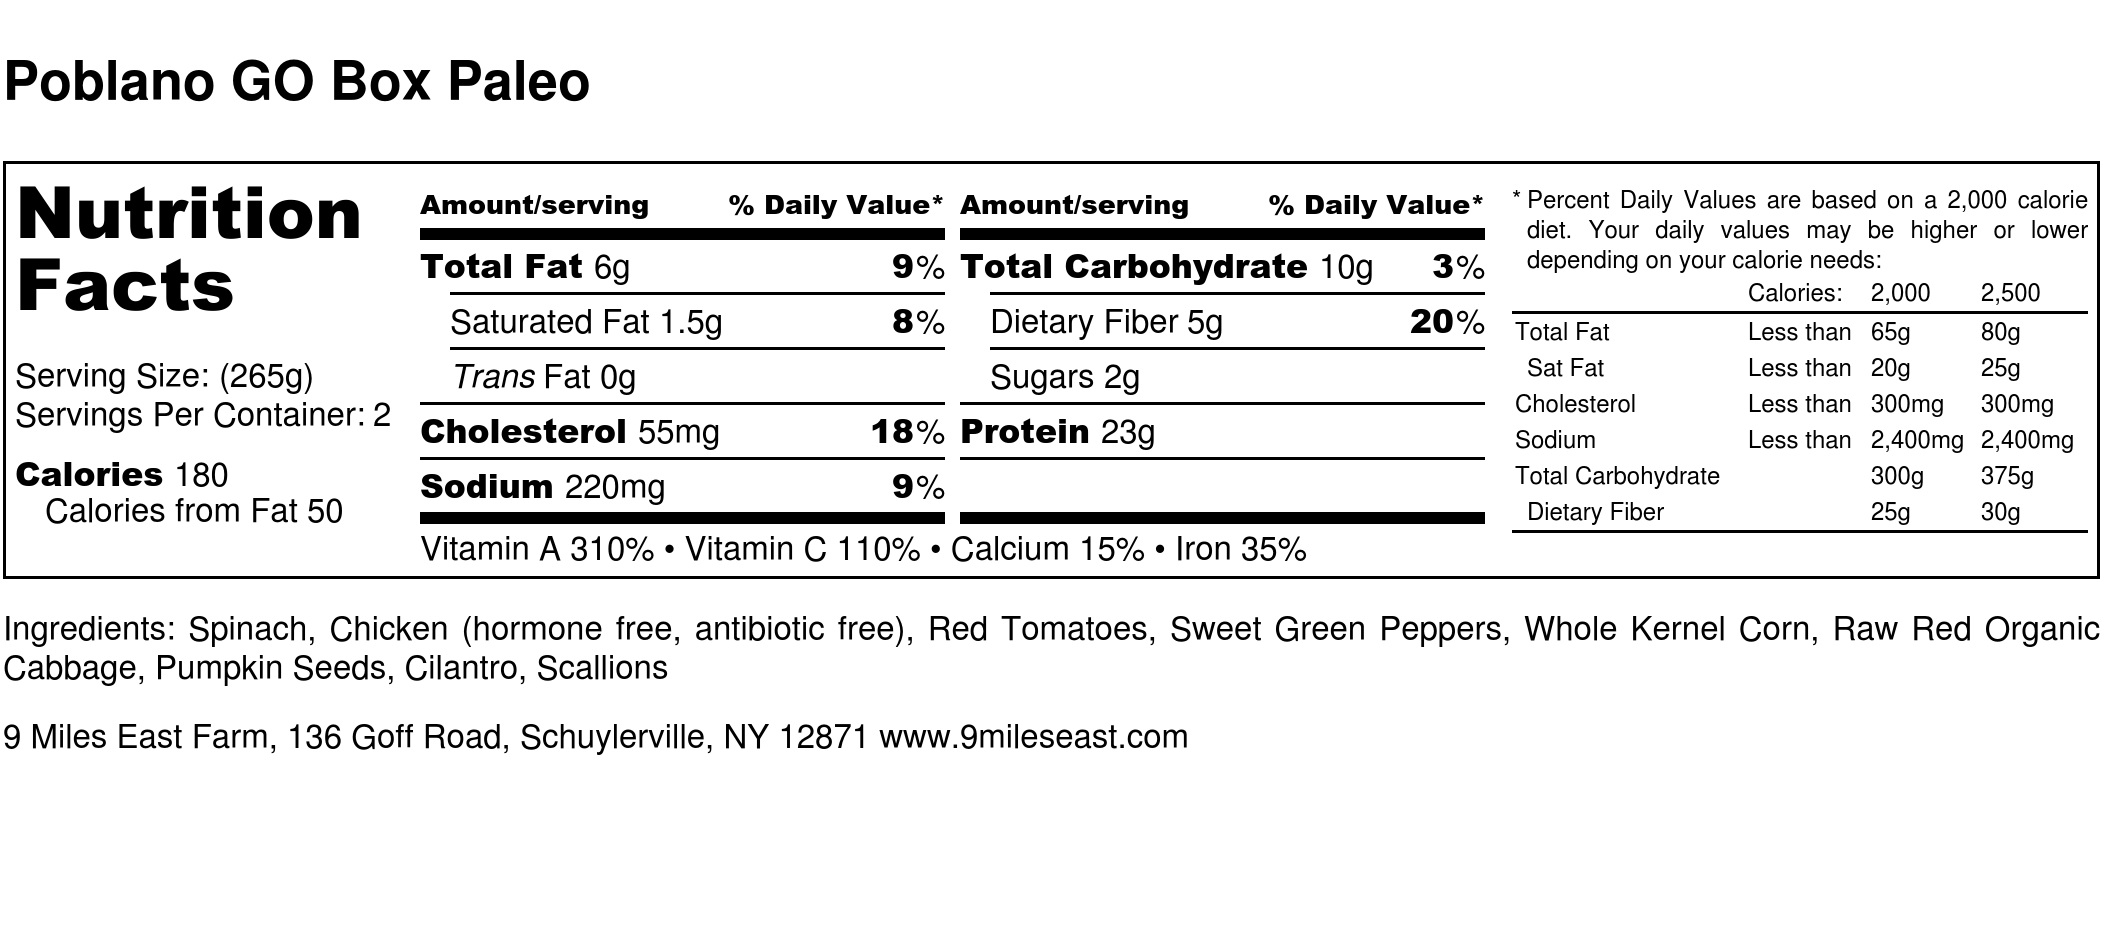 Poblano GO Box Paleo - Nutrition Label.jpg